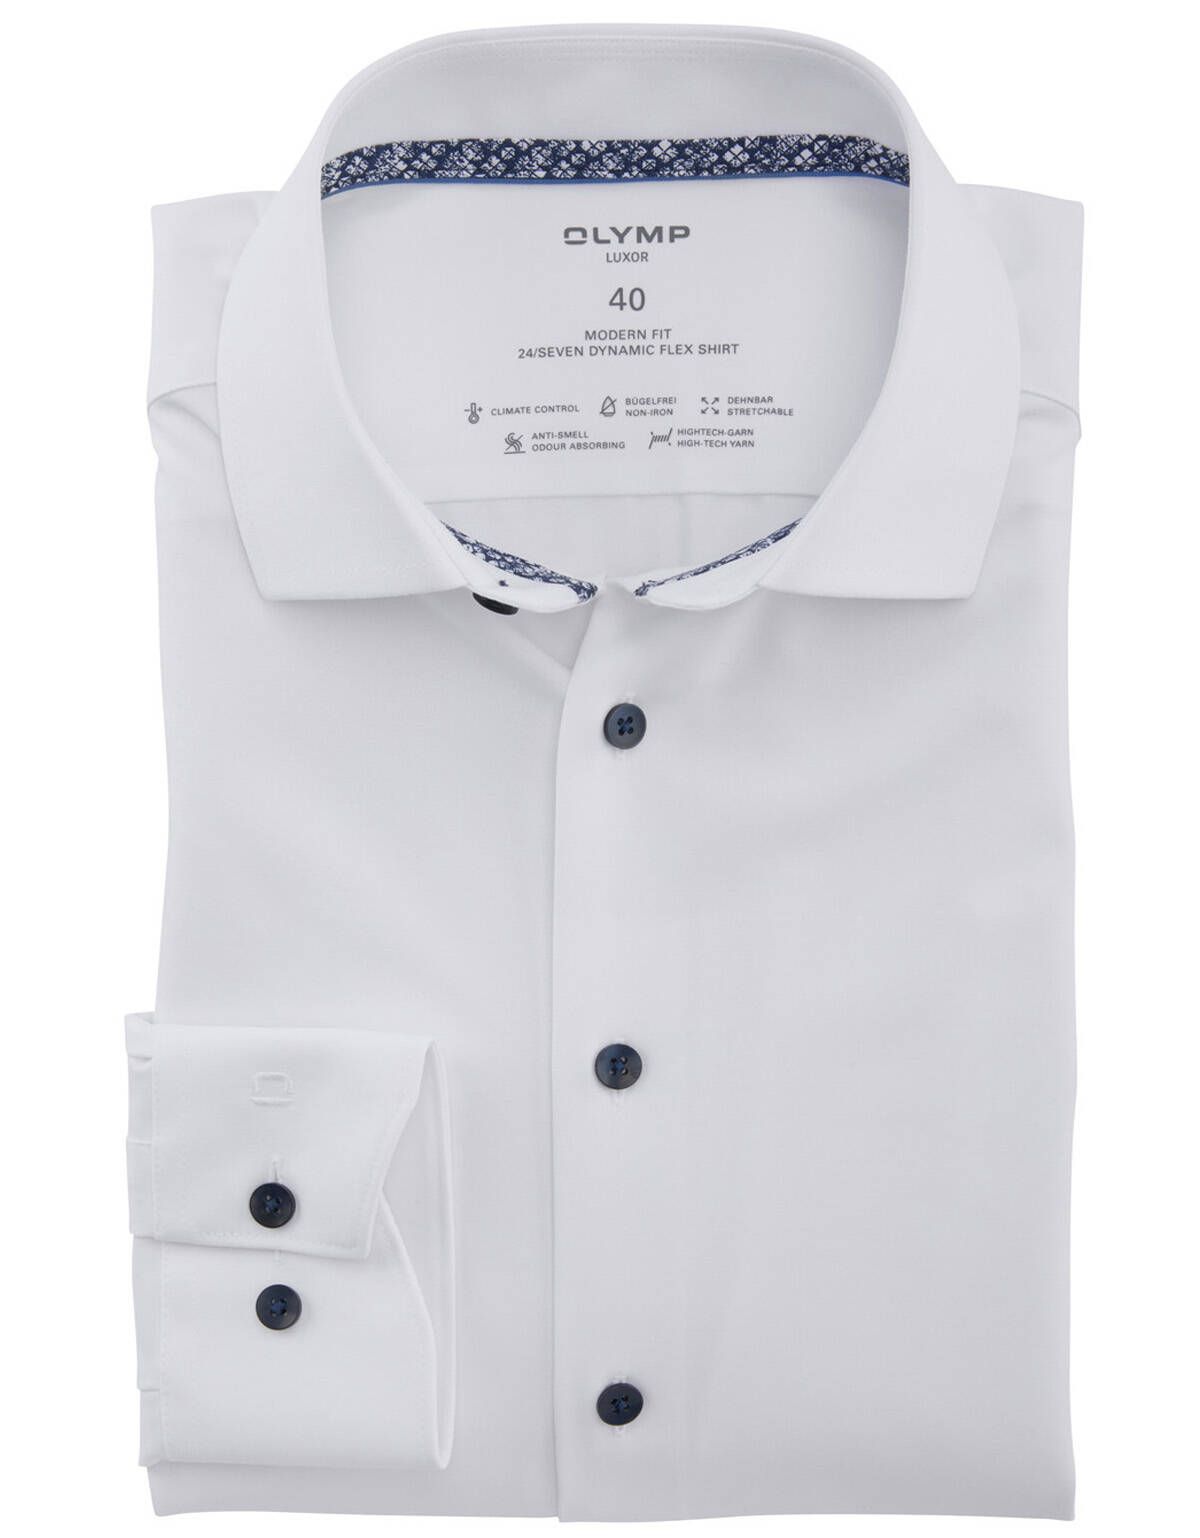 Рубашка OLYMP Luxor 24/7, modern fit, рост до 176[БЕЛЫЙ]